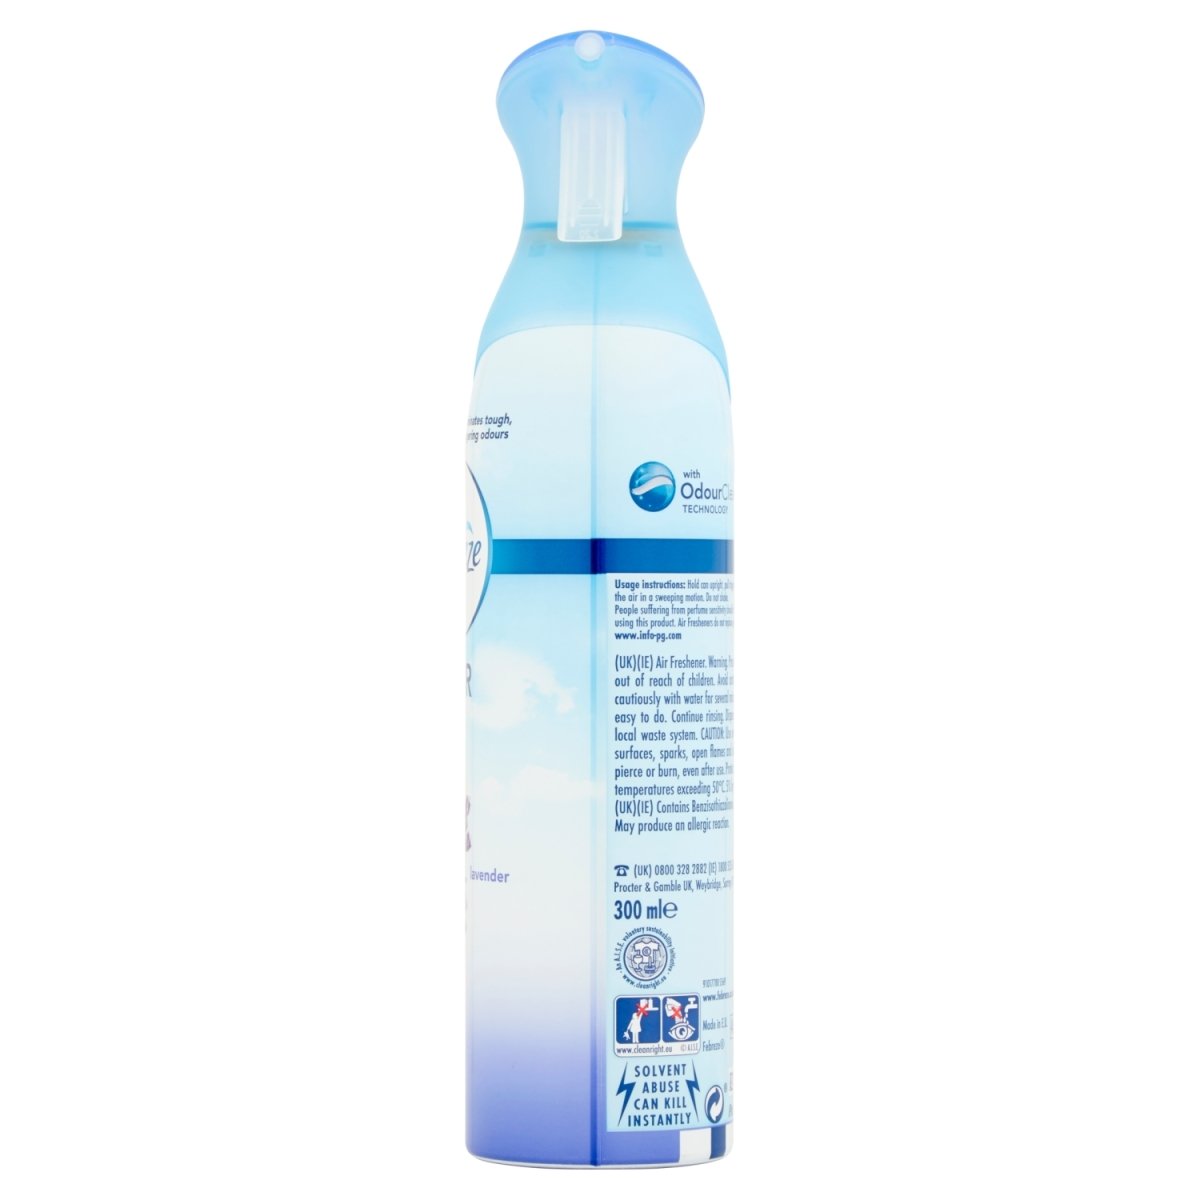 Febreze Air Freshener Lavender - Intamarque 4015400784494